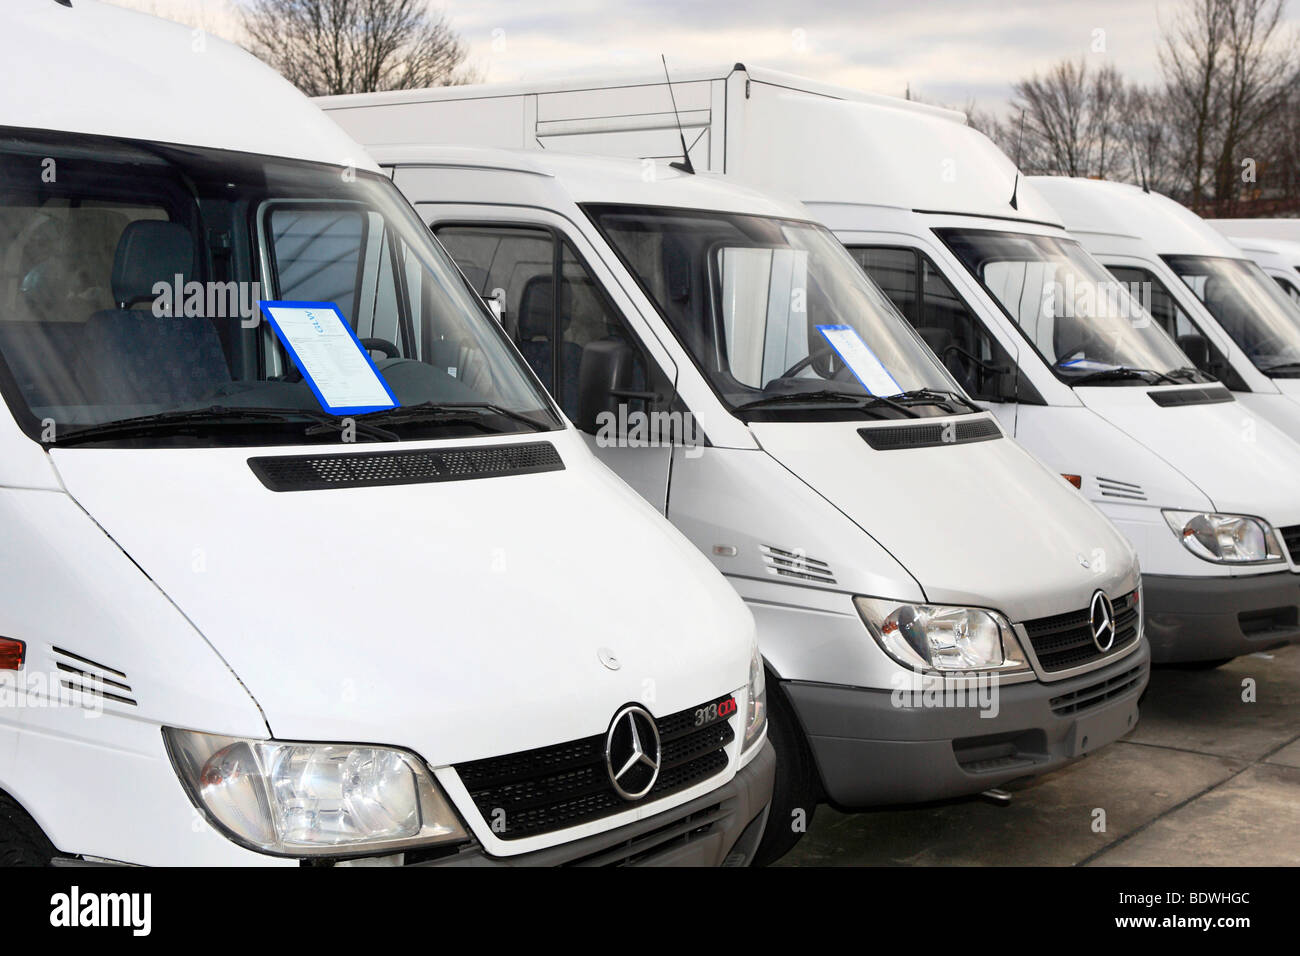 Vans for sale Stock Photo